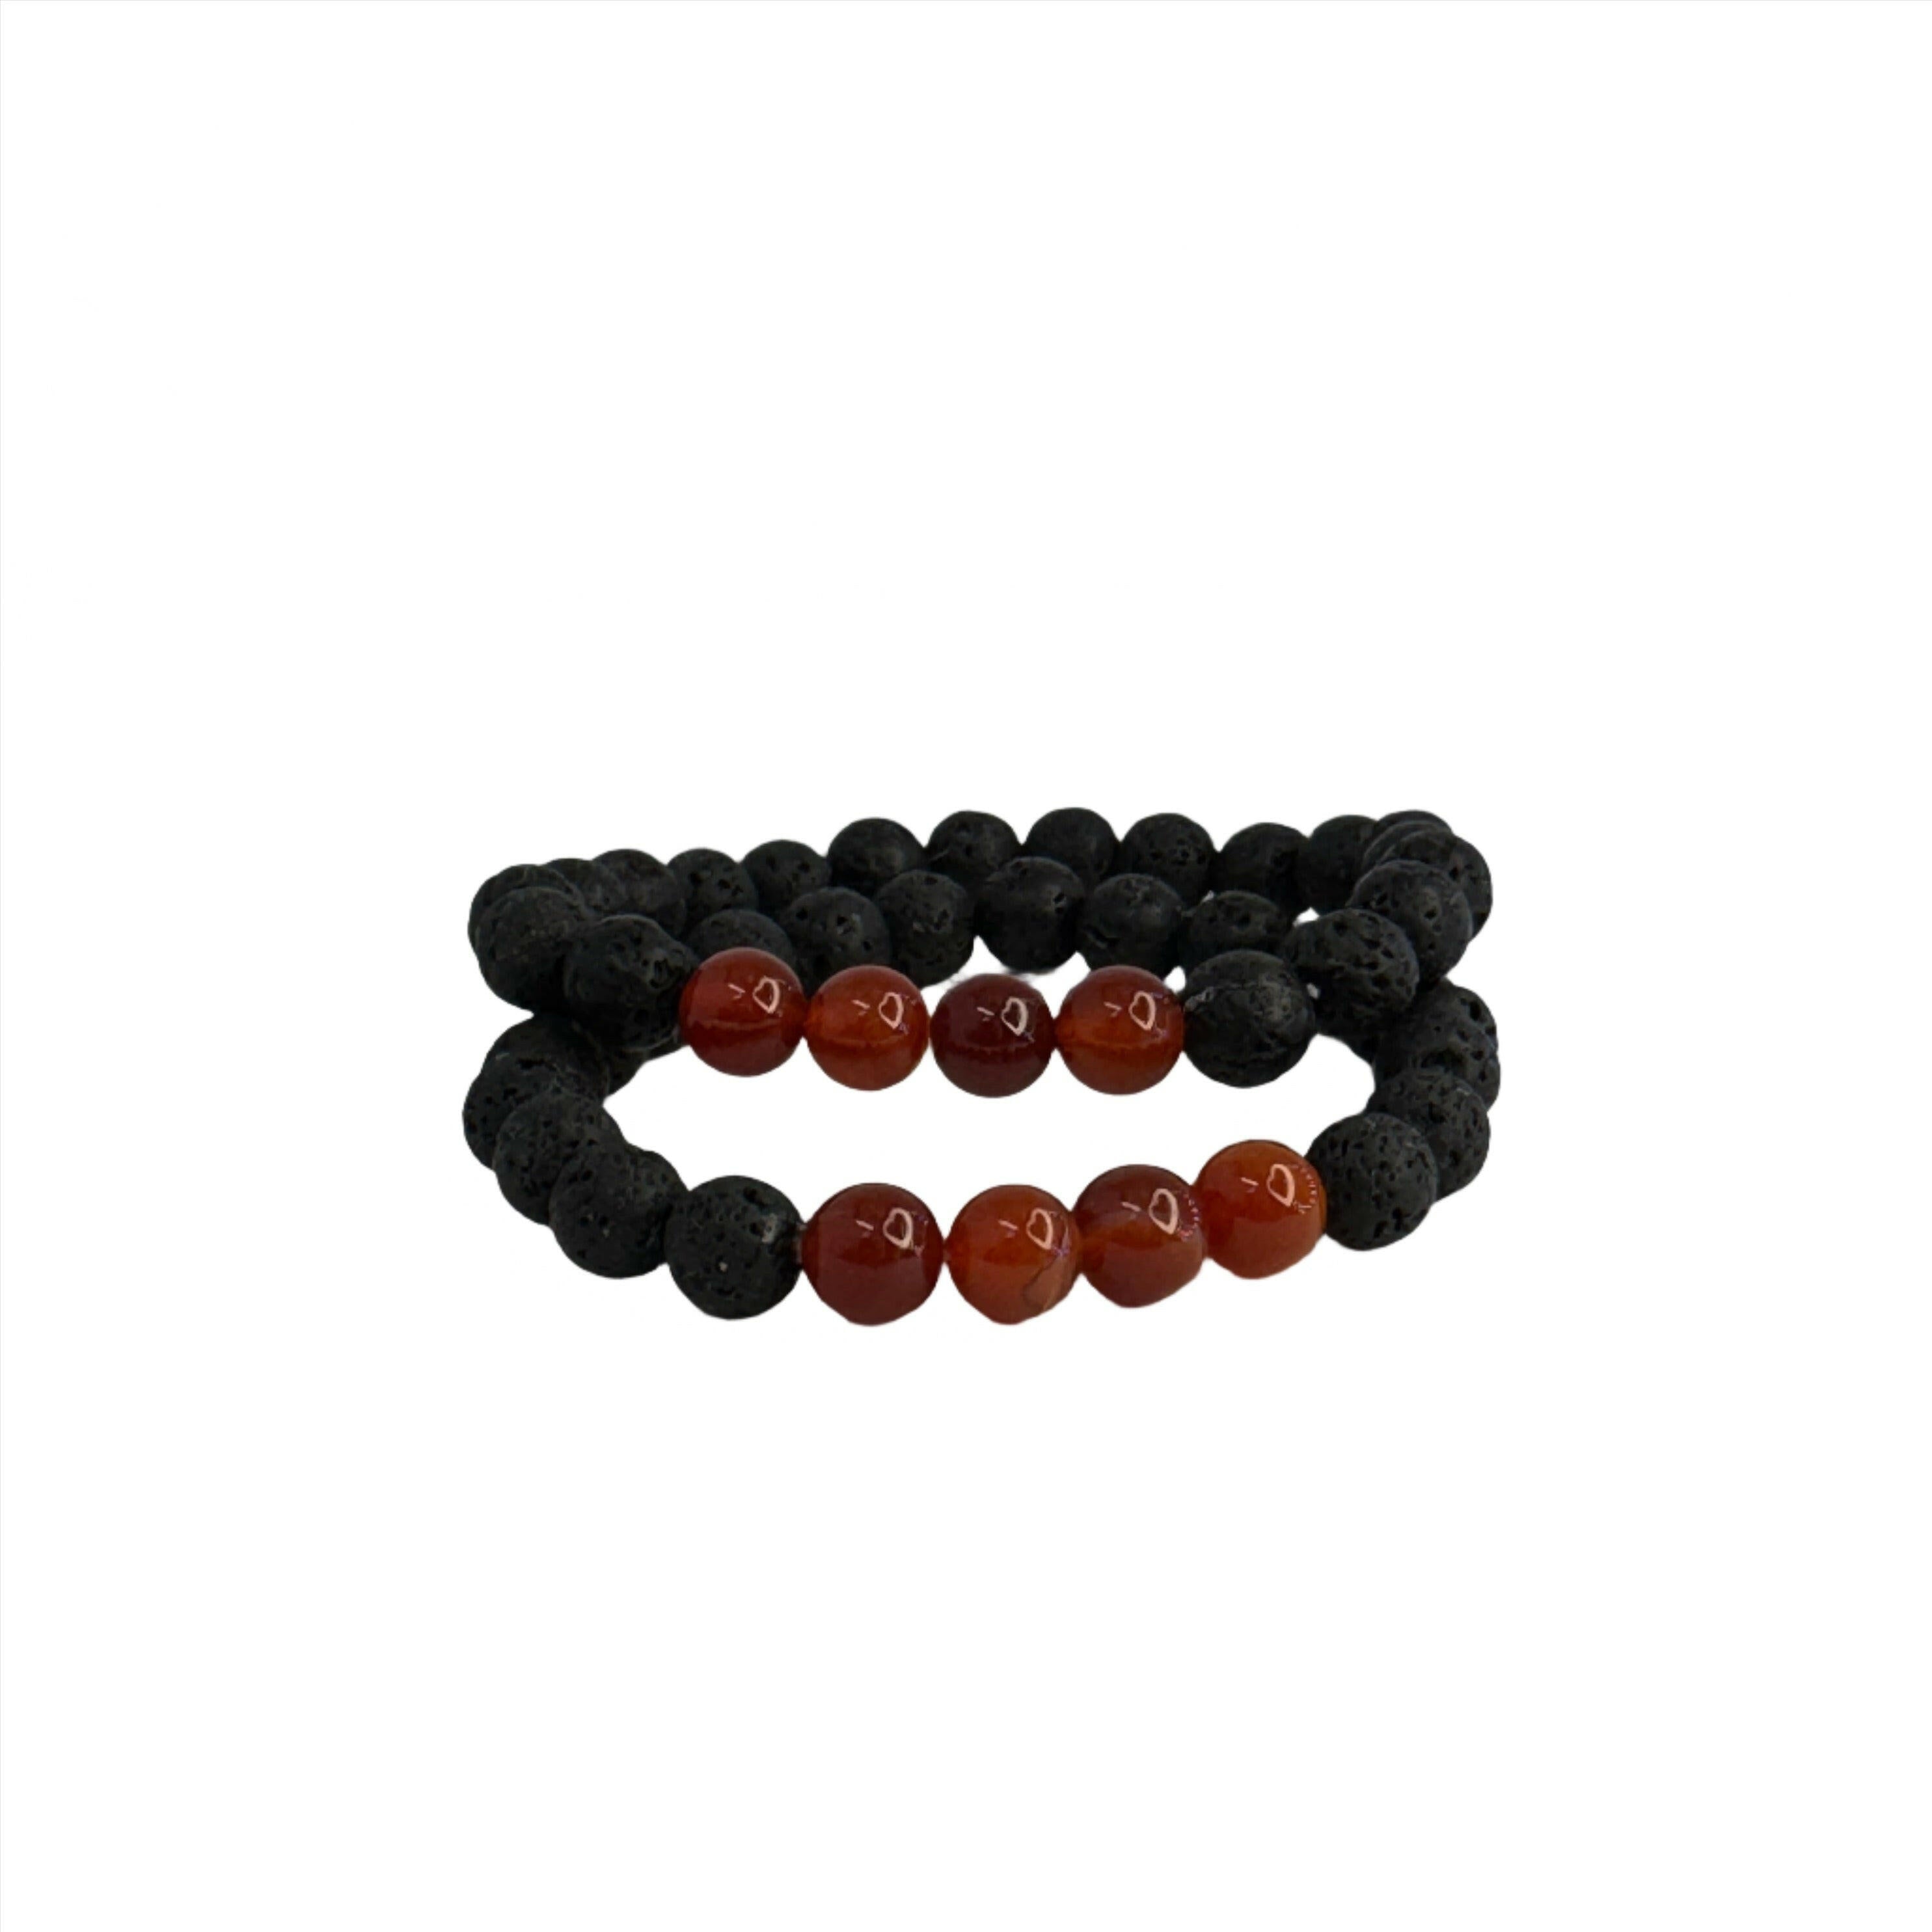 8mm bead lava bracelet